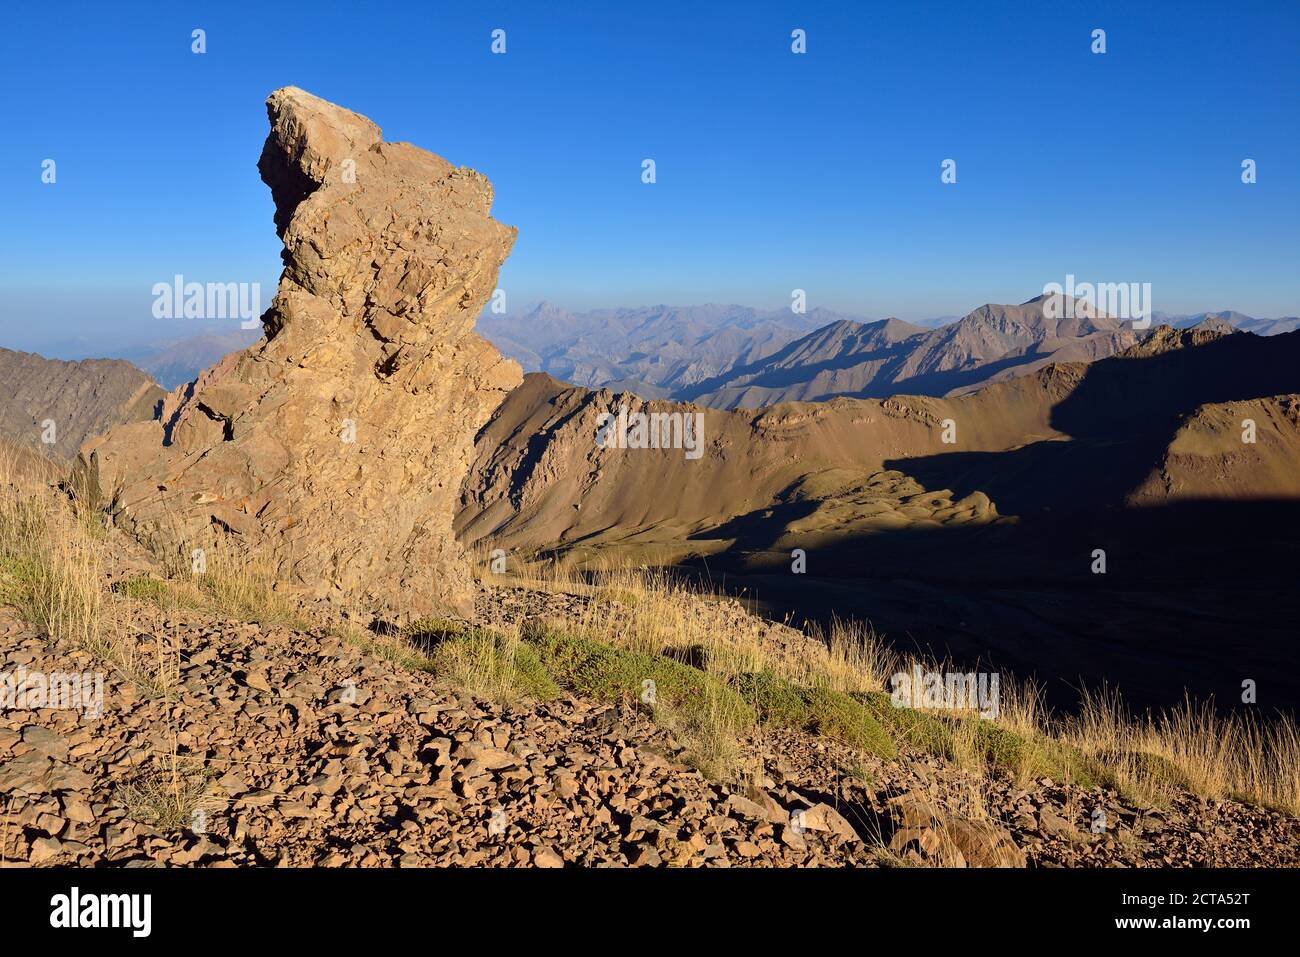 Iran, Mazandaran Province, Alborz mountains, Takht-e Suleyman Massif, Alam Kuh area, Kelardasht, view towards Damavand Stock Photo